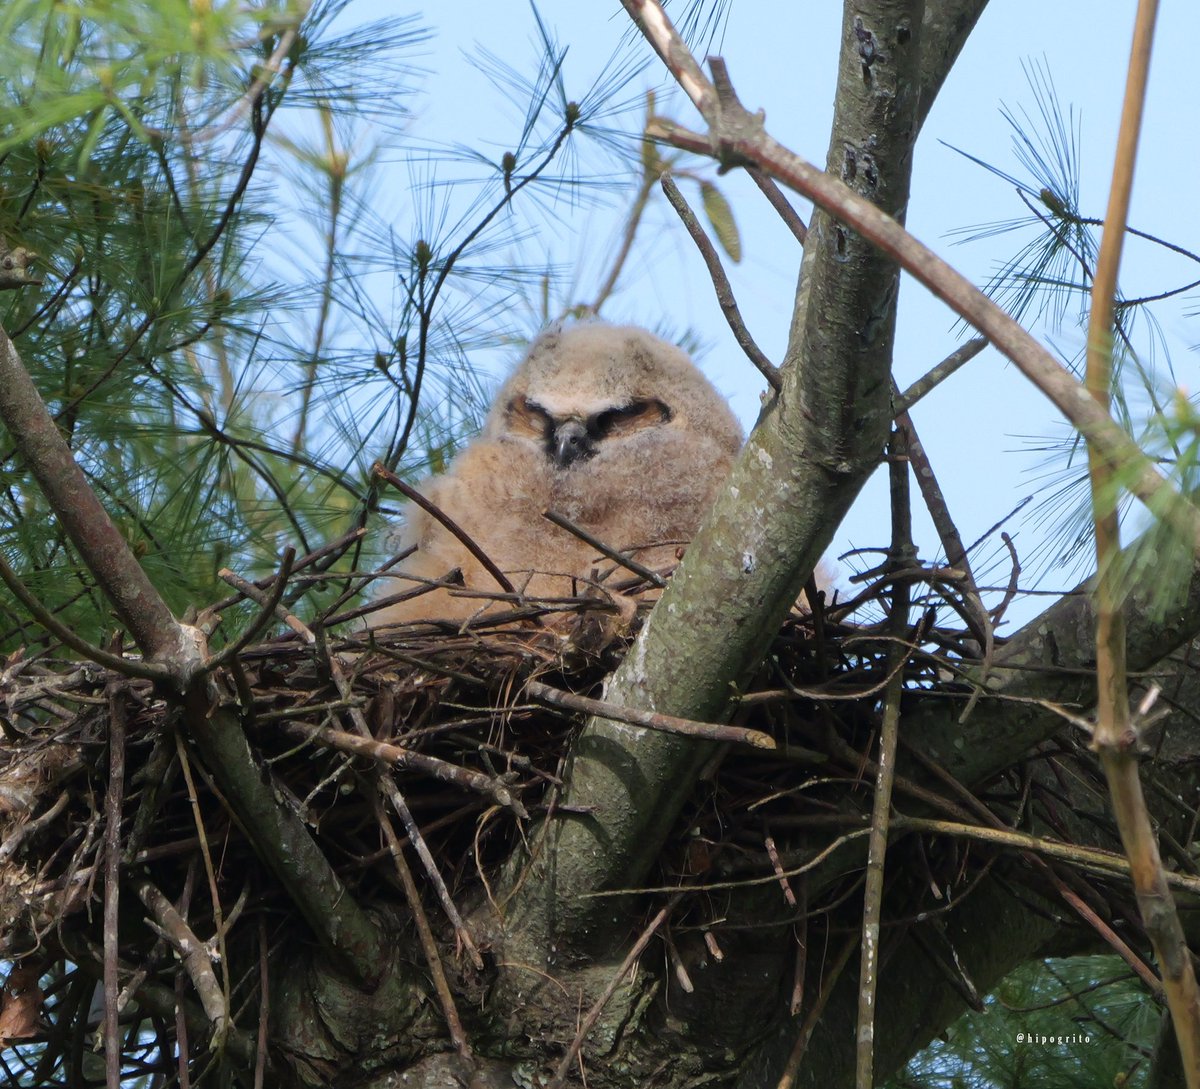 Great Horned Owlet
Northport, Long Island, NY

#birds #owls #birding